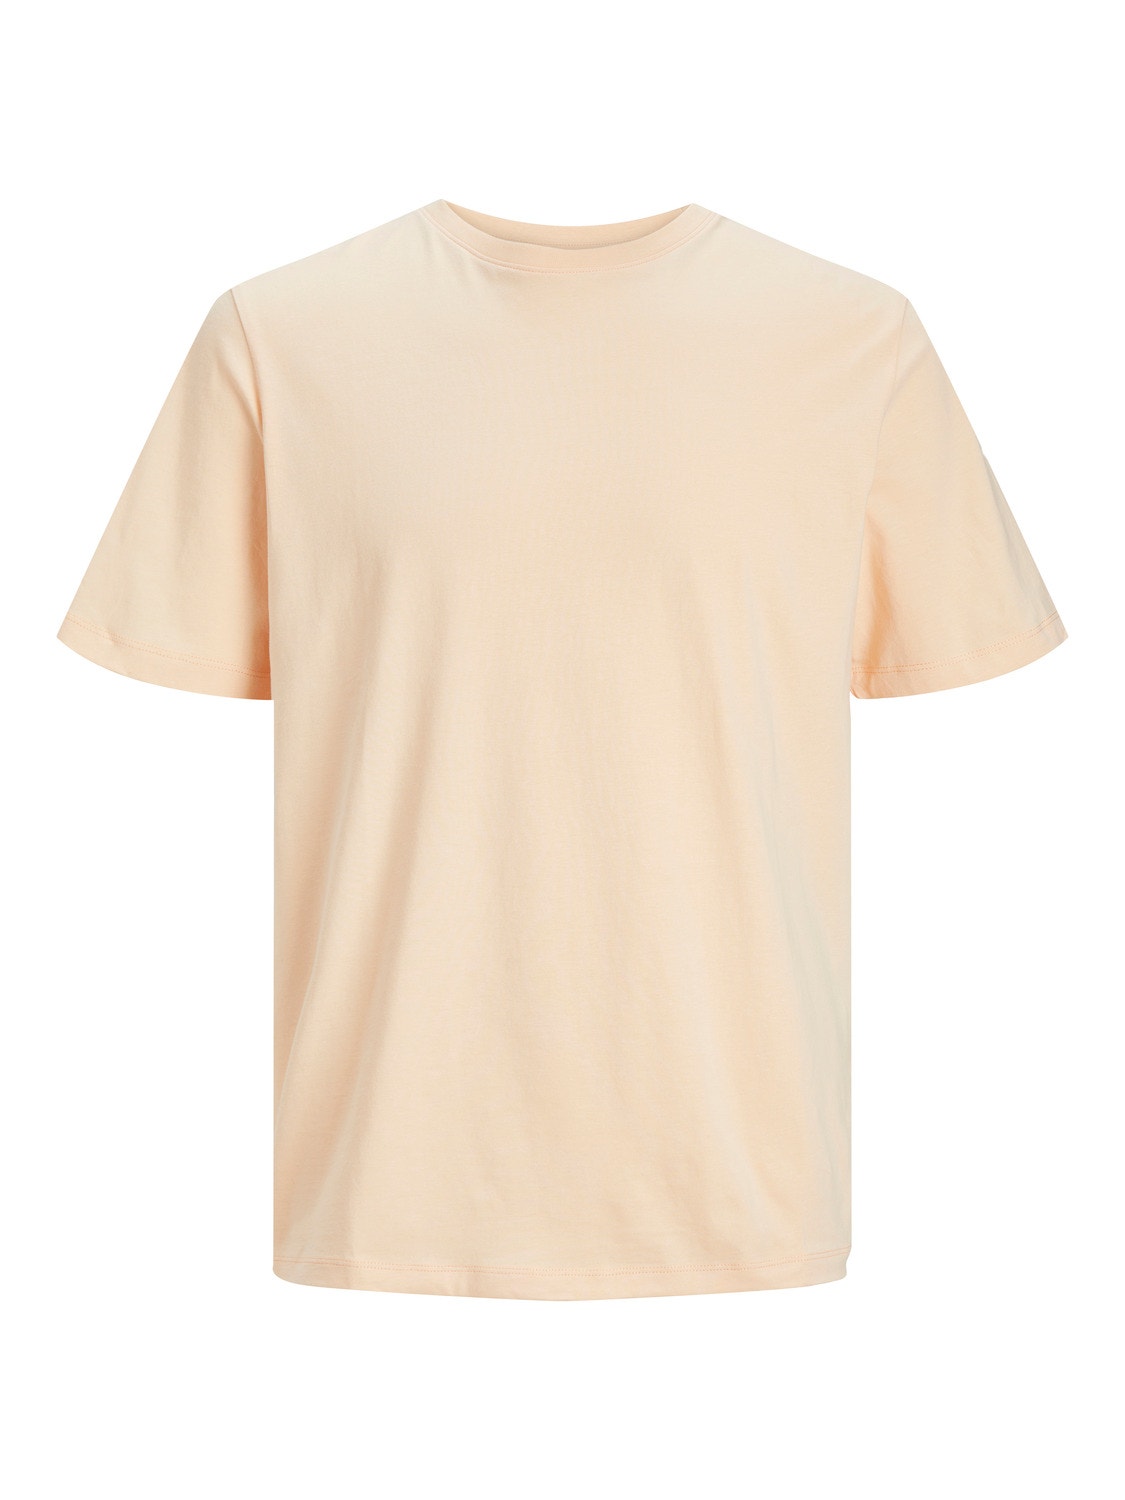 Jack & Jones T-shirt Semplice Girocollo -Apricot Ice  - 12156101